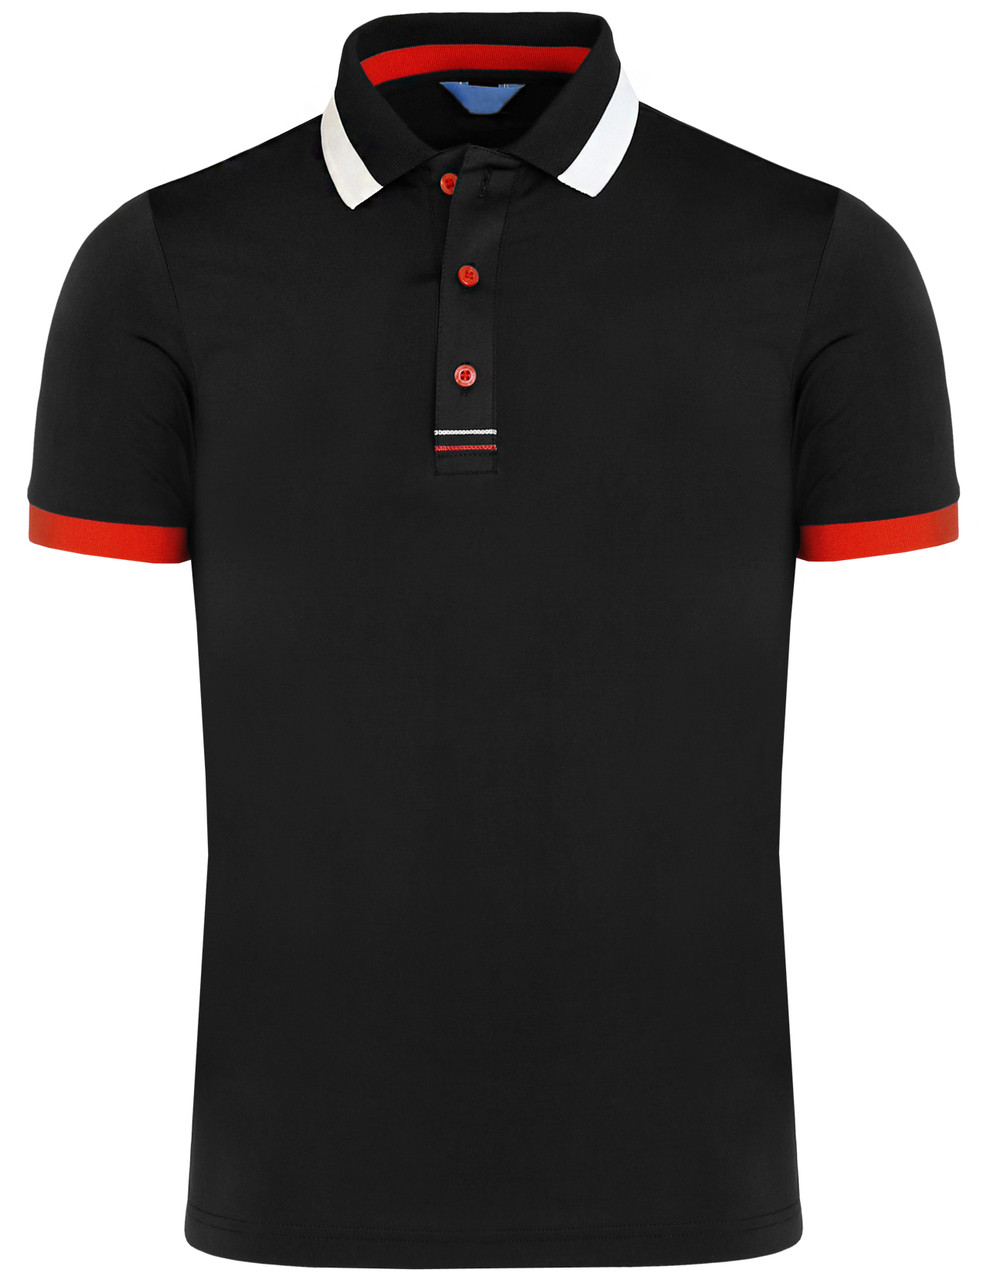 Short Sleeve Dri Fit Spandex Multi Polo Shirt-Unisex